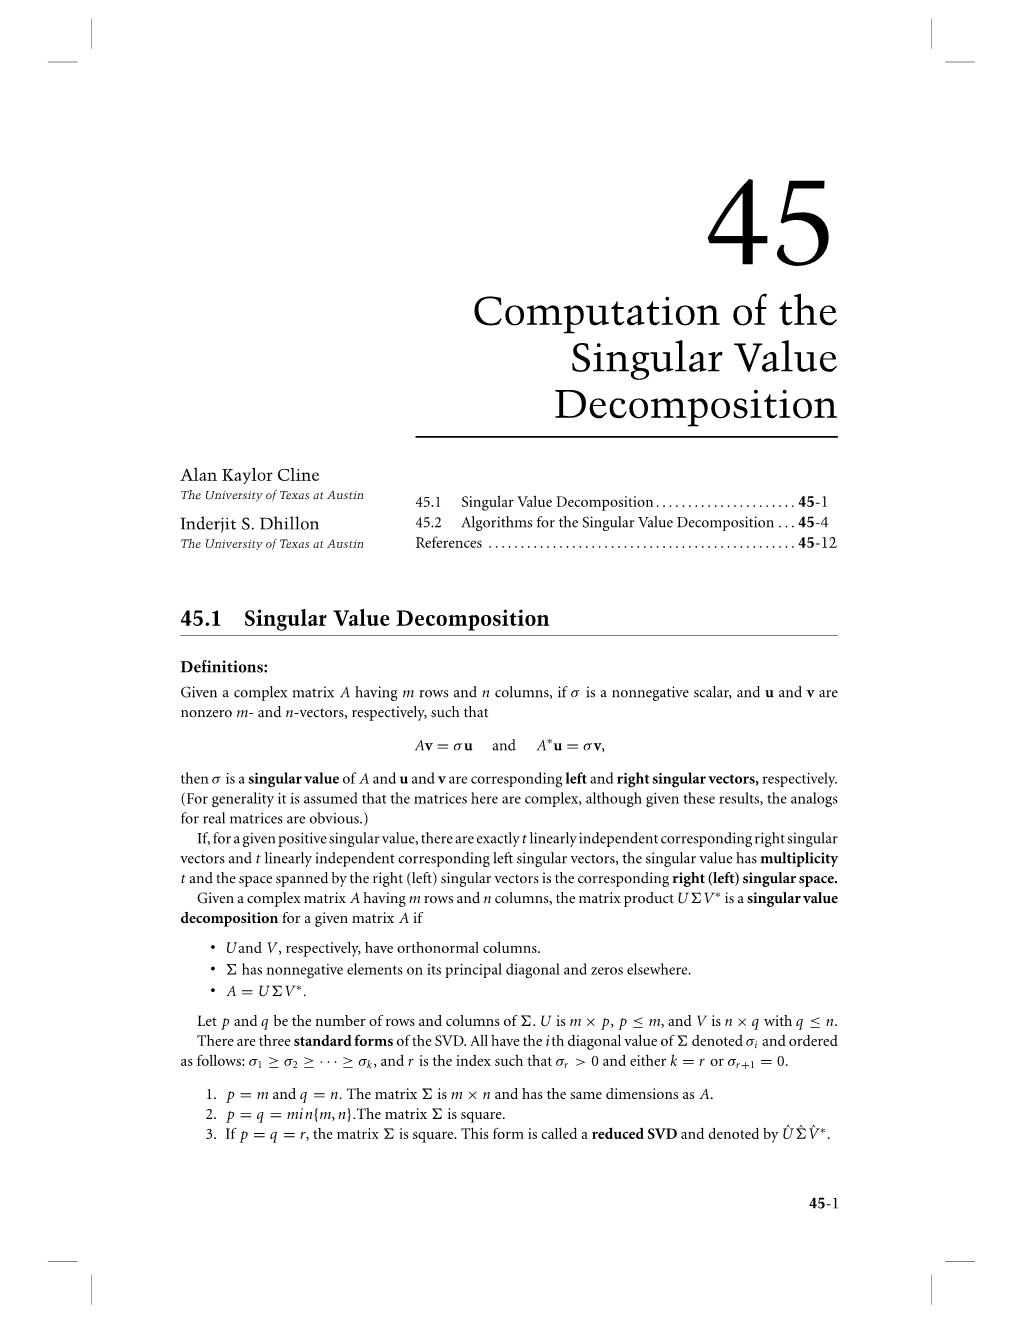 Computation of the Singular Value Decomposition